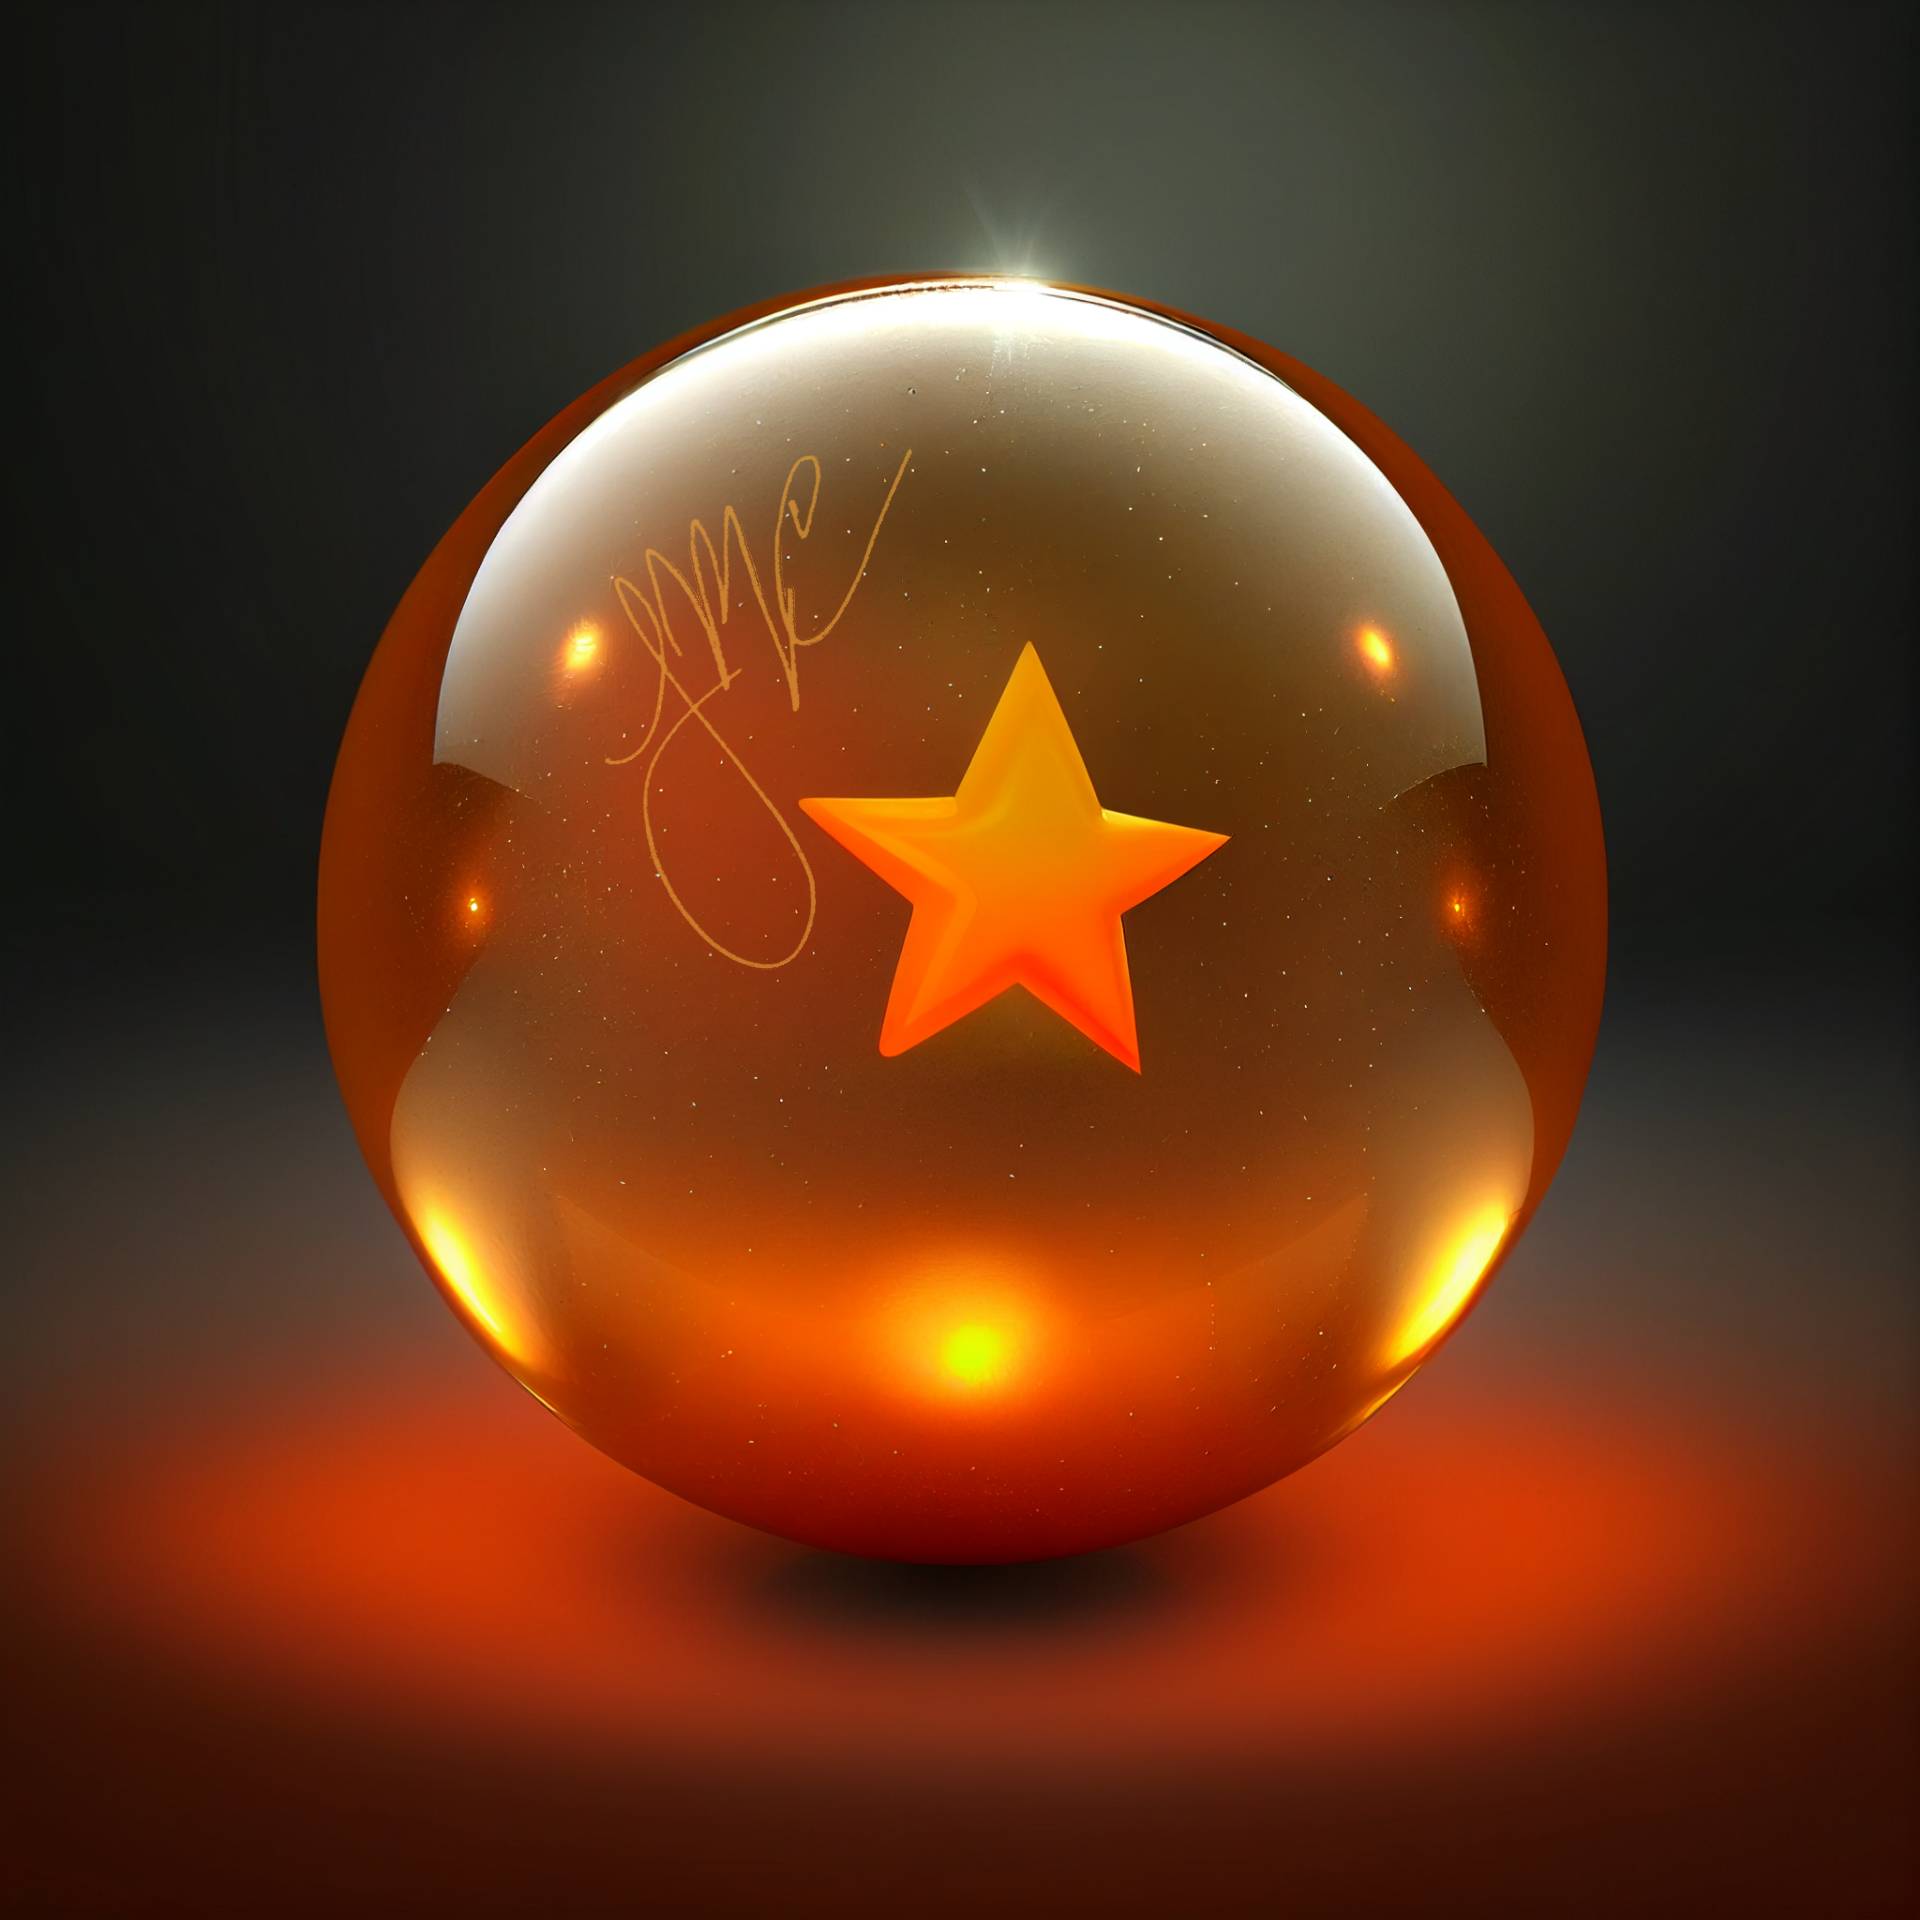 dragon ball 1 star